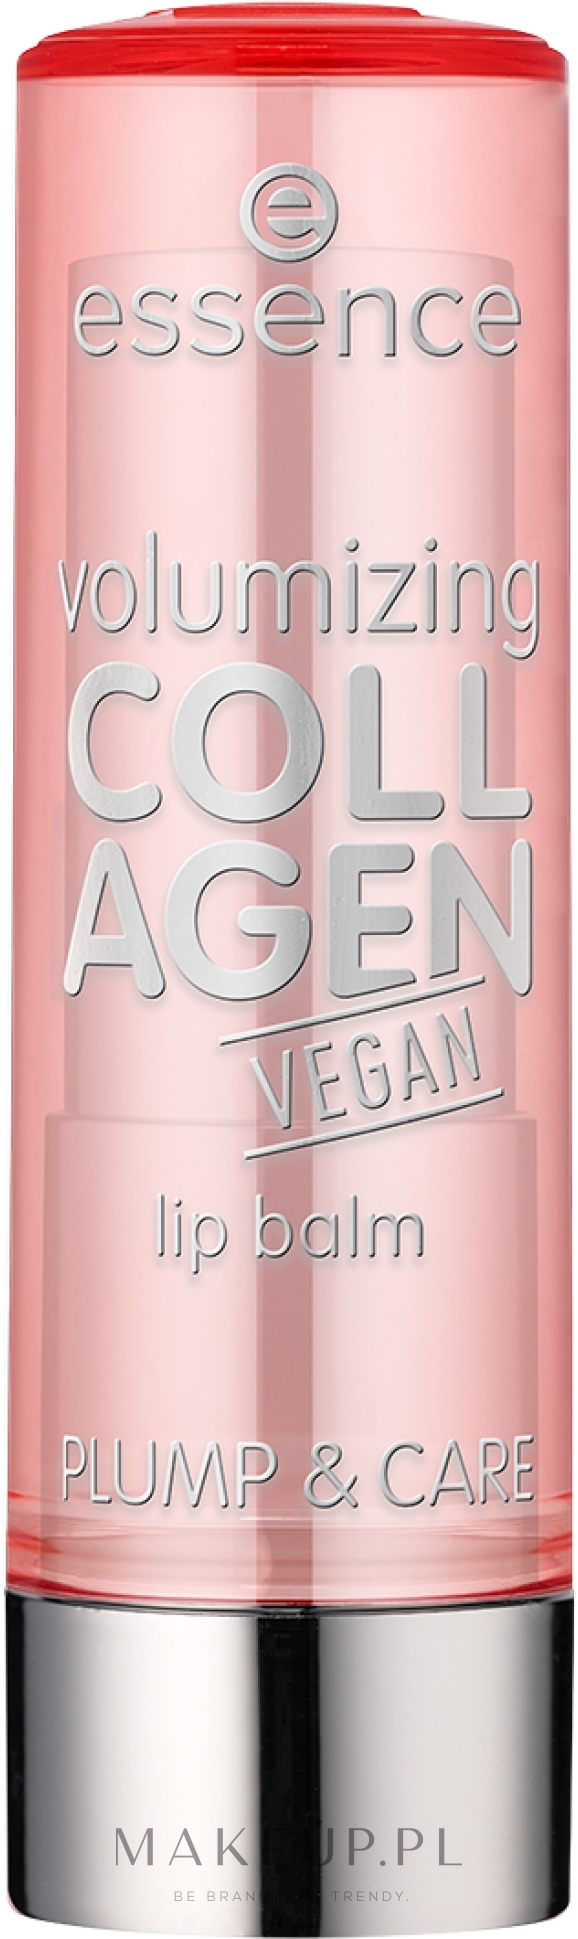 Balsam do ust - Essence Volumizing Collagen Vegan Lip Balm — Zdjęcie 3.5 g